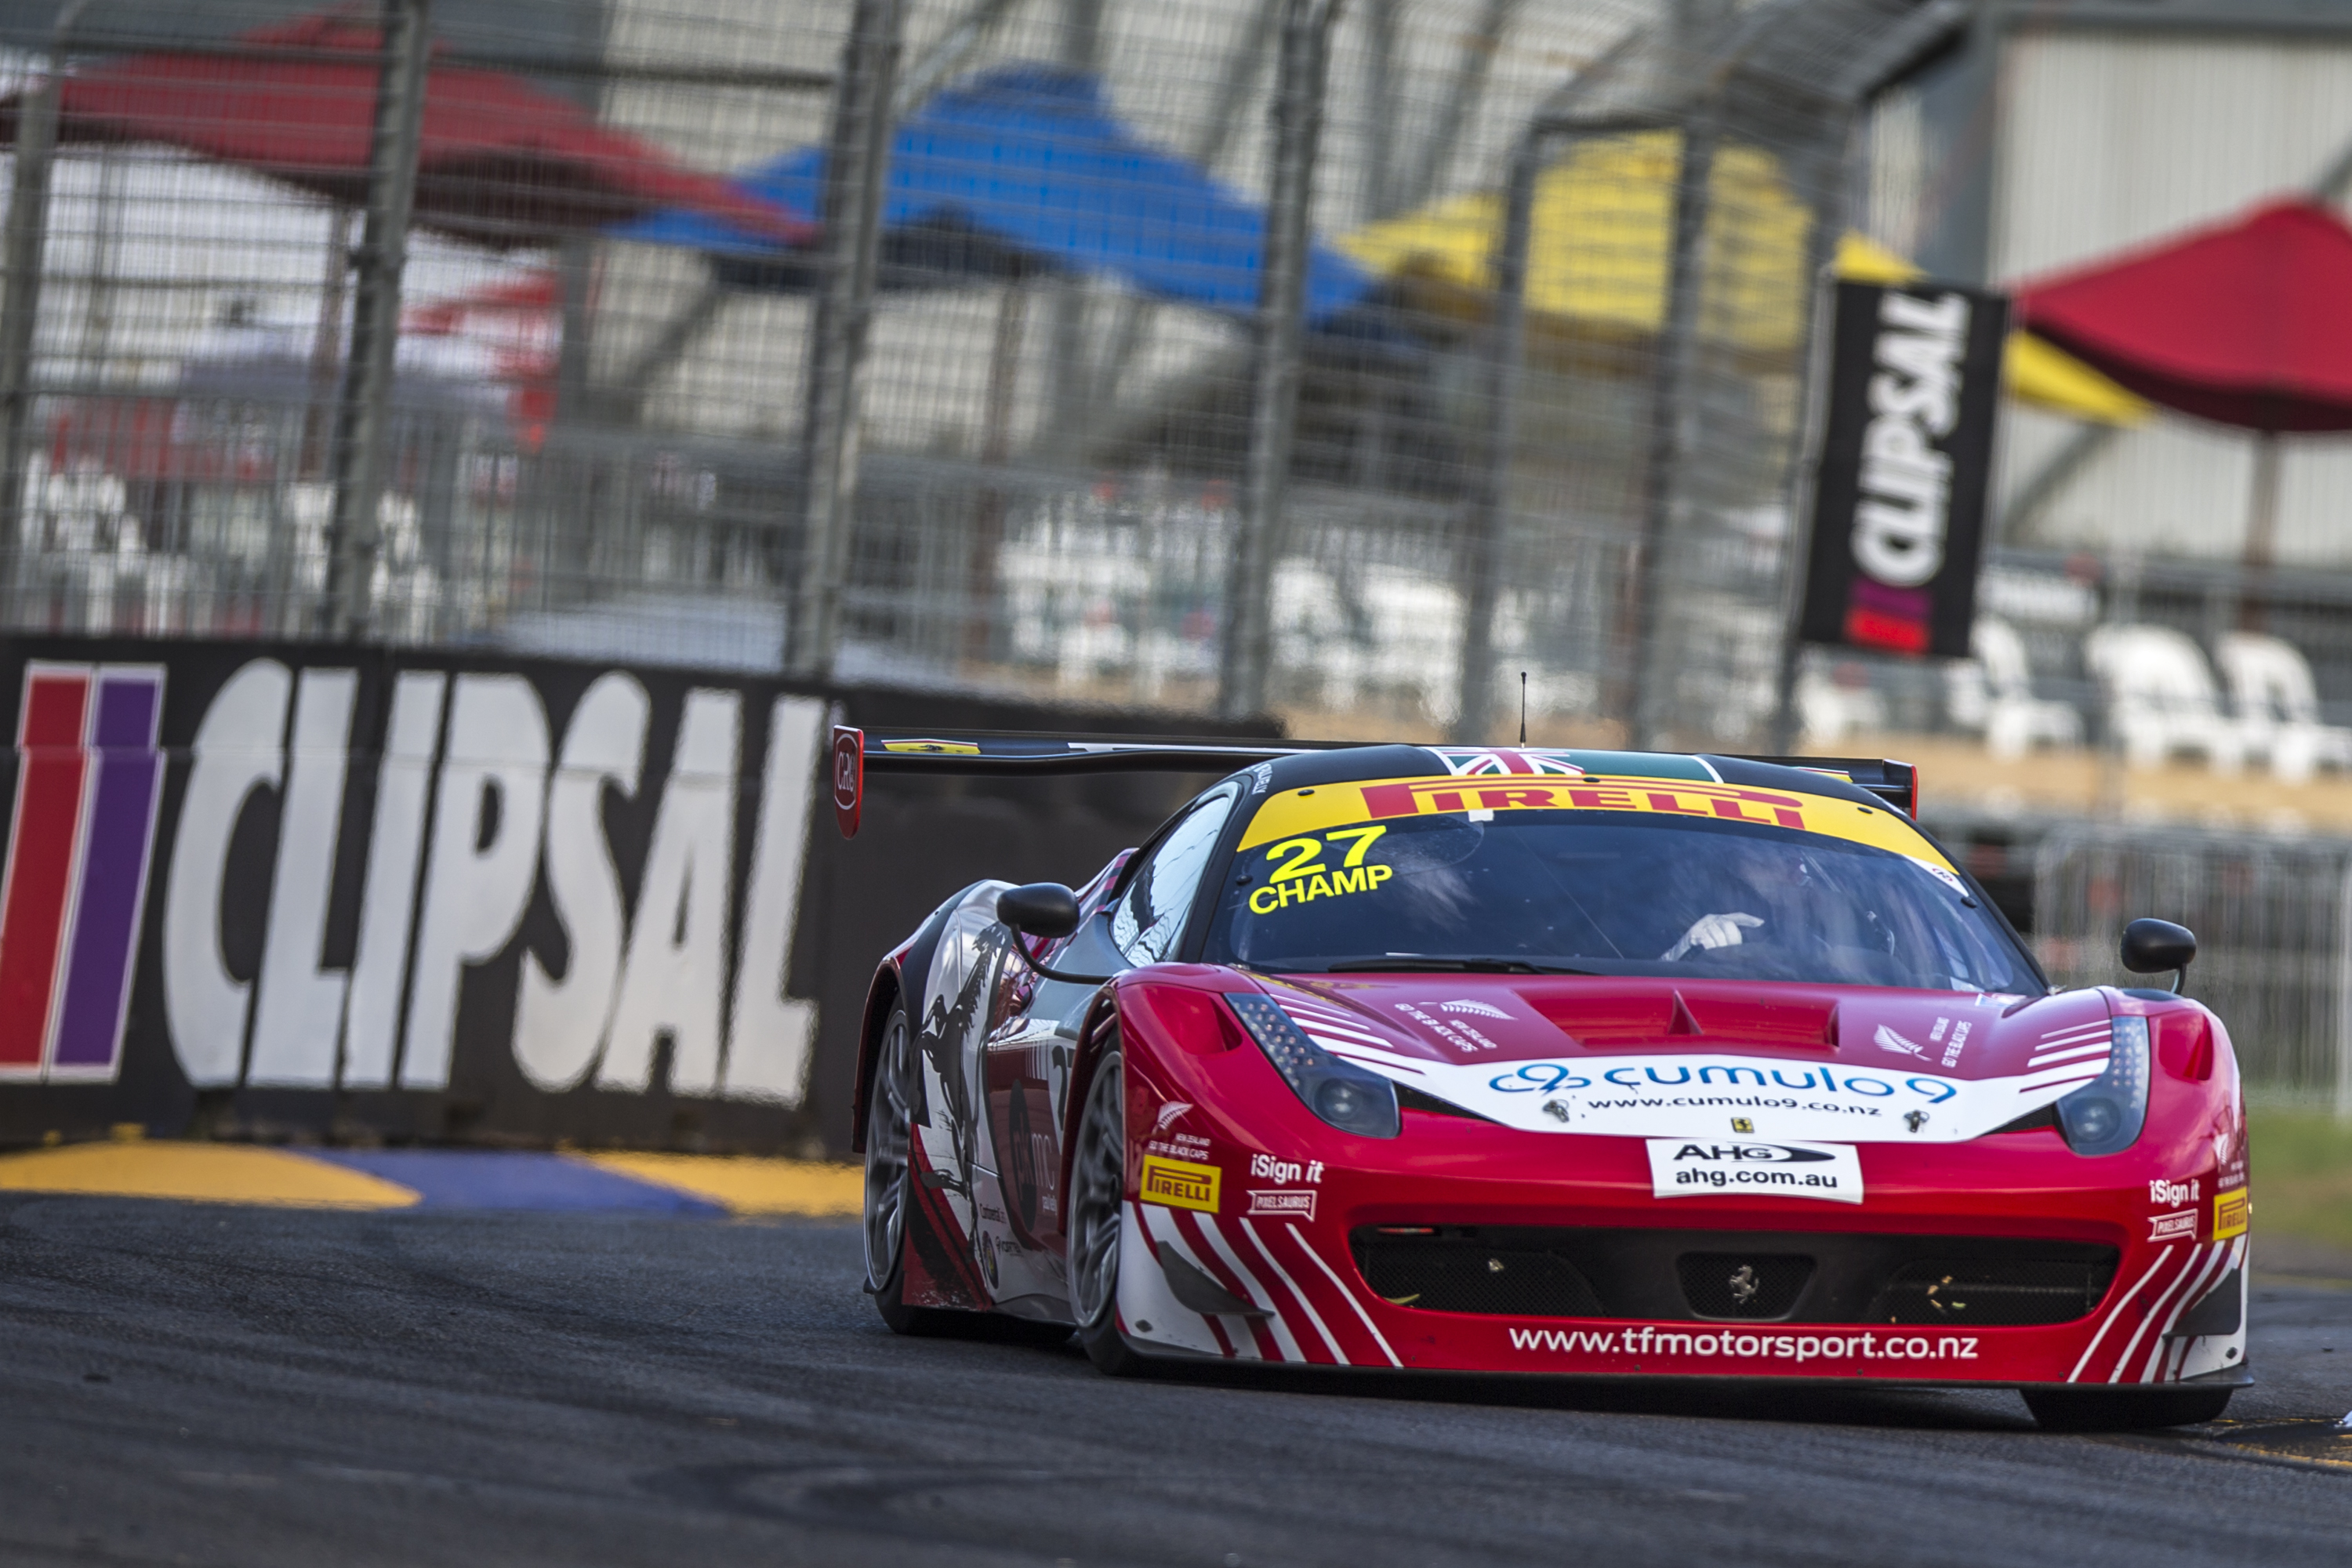 TFM poised for Phillip Island return with rebuilt Ferrari